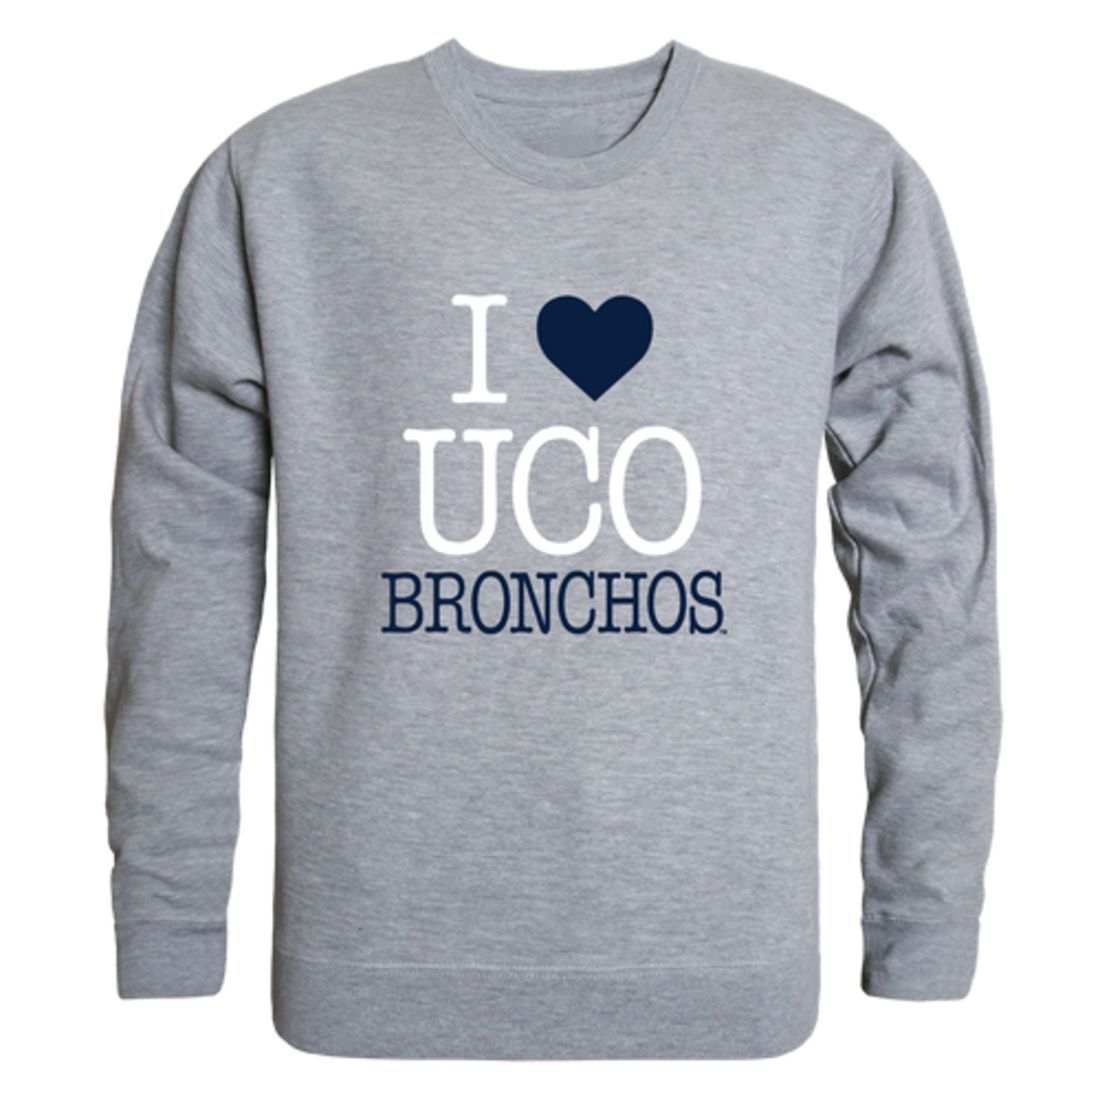 I-Love-University-of-Central-Oklahoma-Bronchos-Fleece-Crewneck-Pullover-Sweatshirt